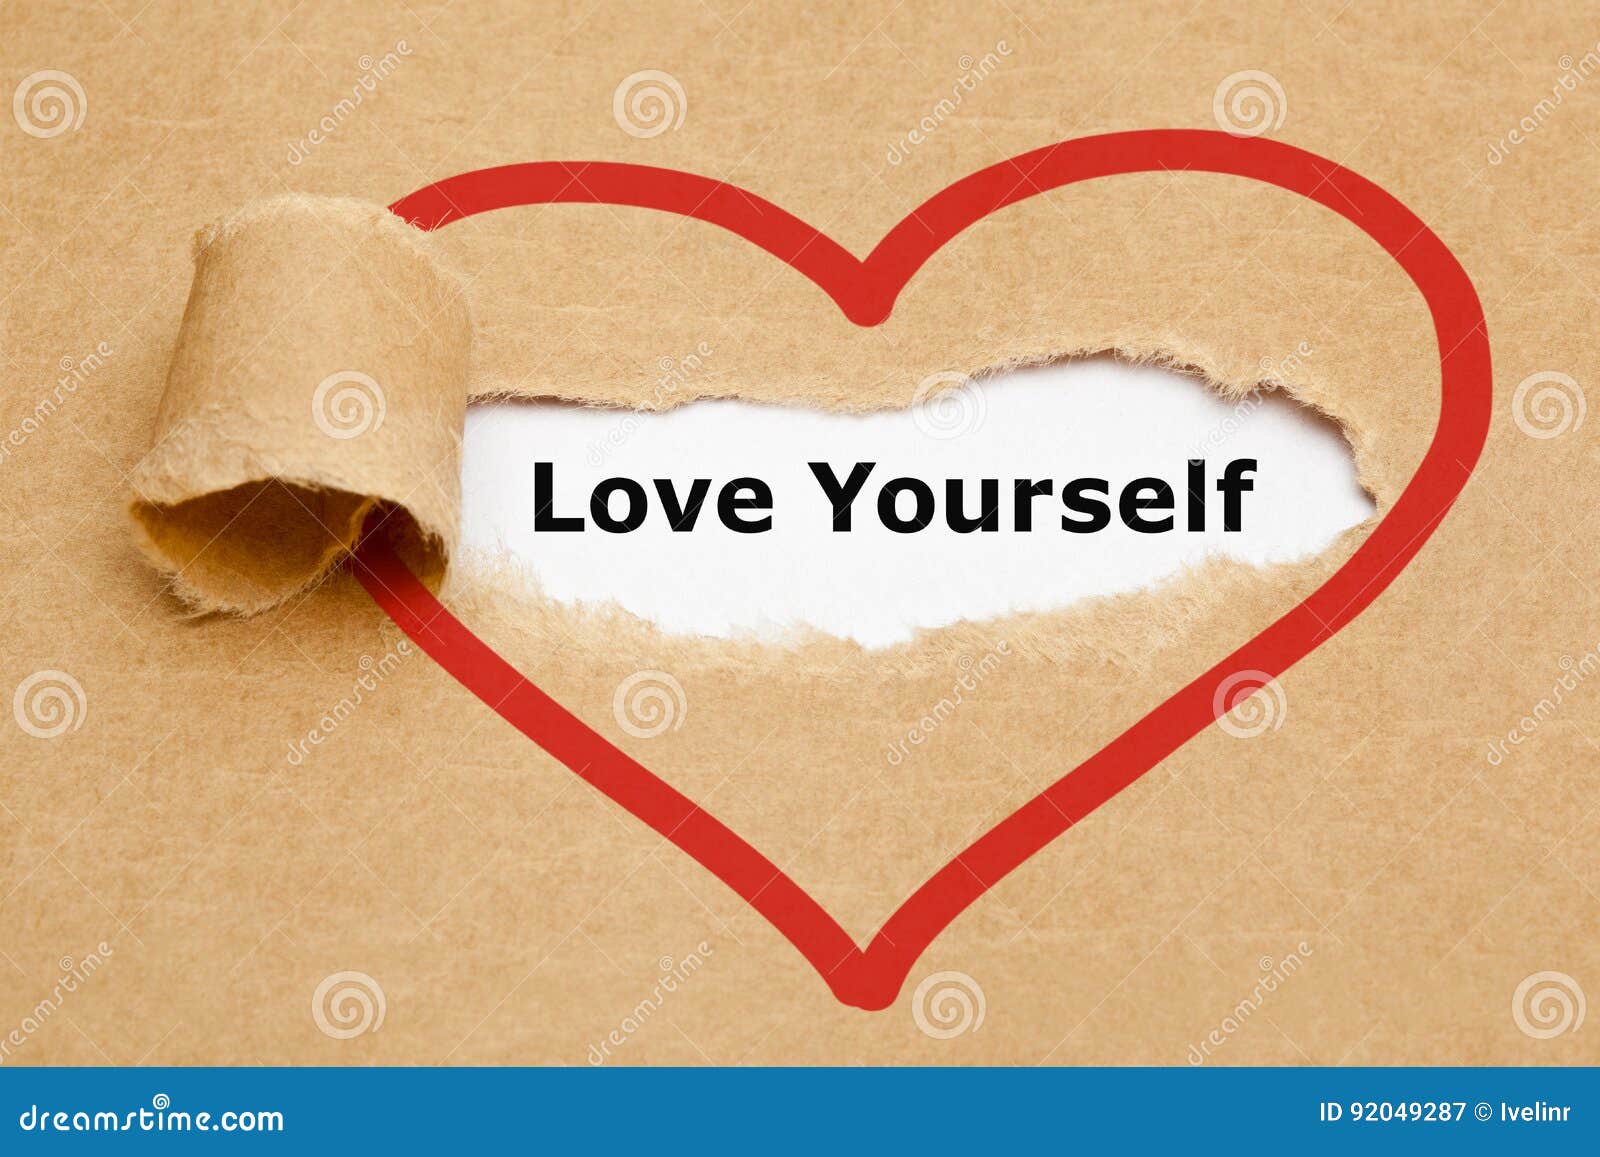 Yourself love 100 Love